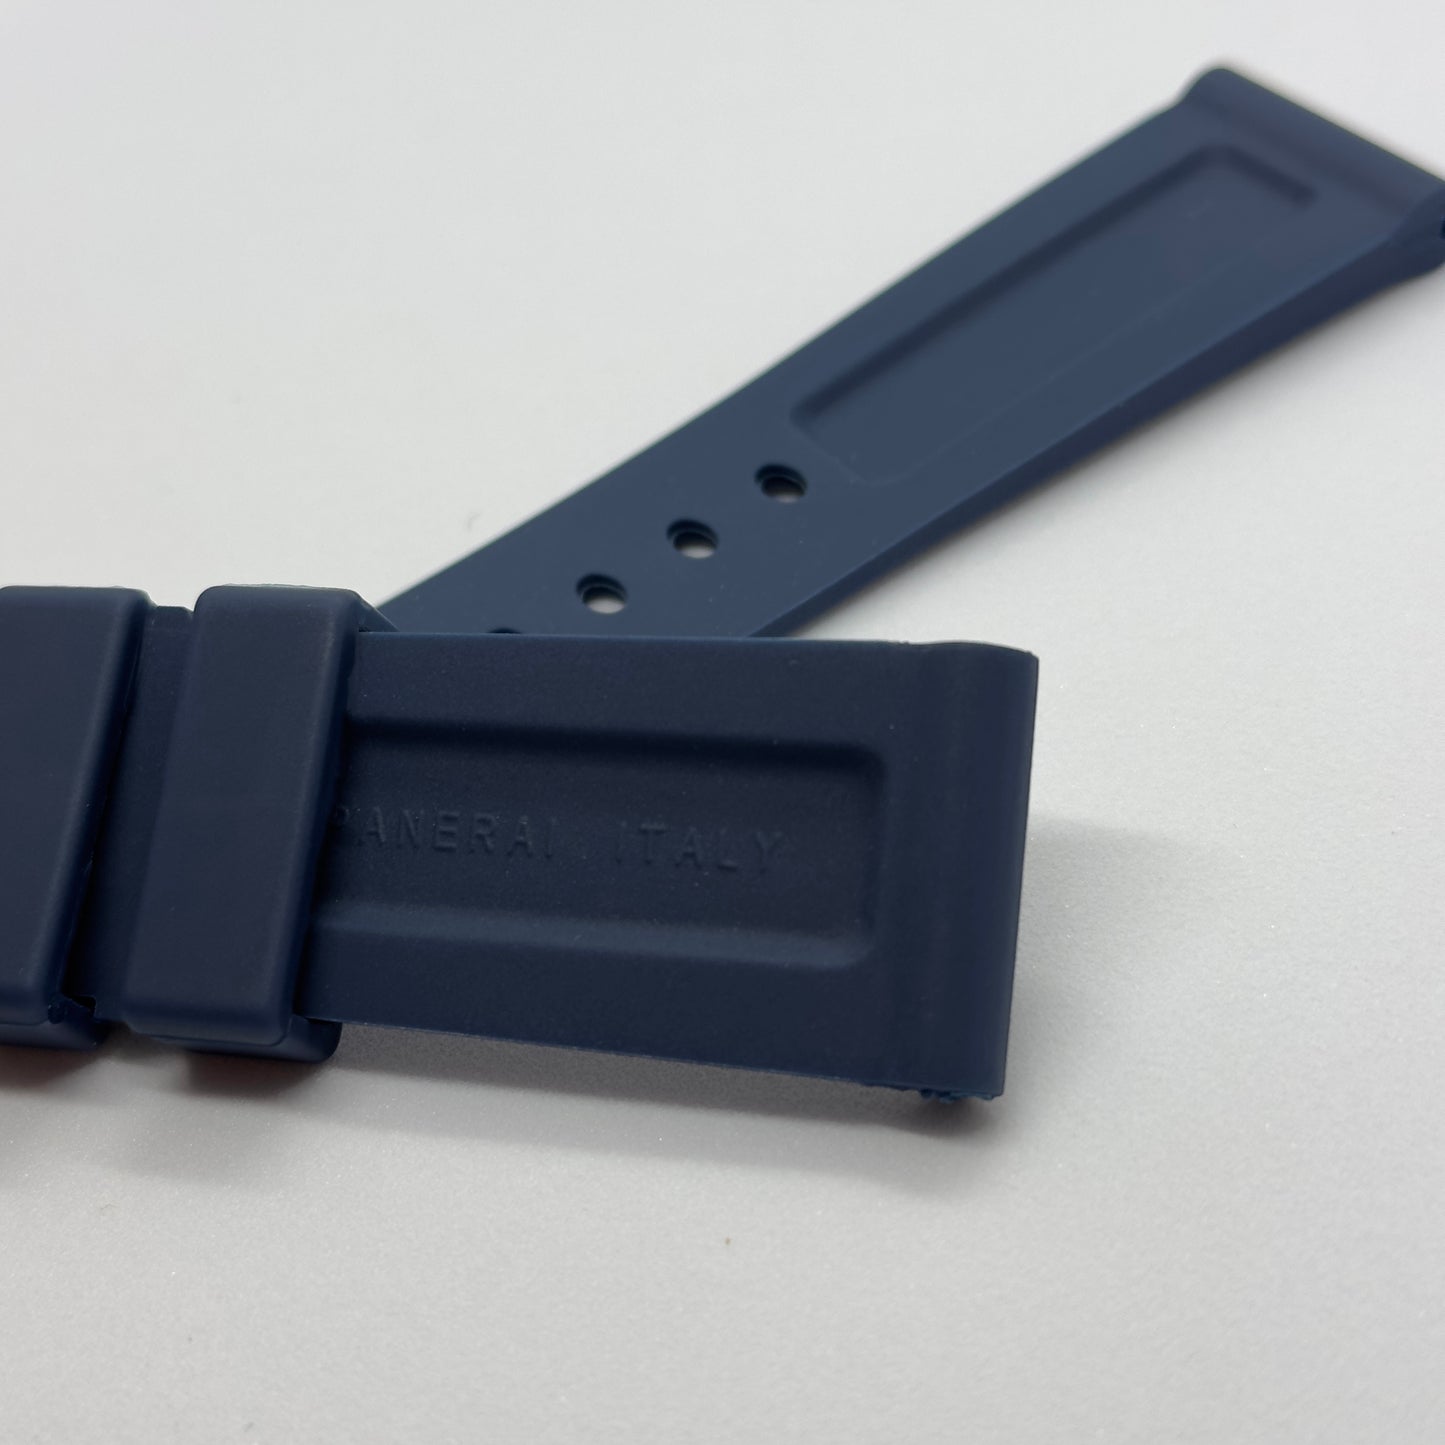 Panerai Officine dark blue rubber band 22mm